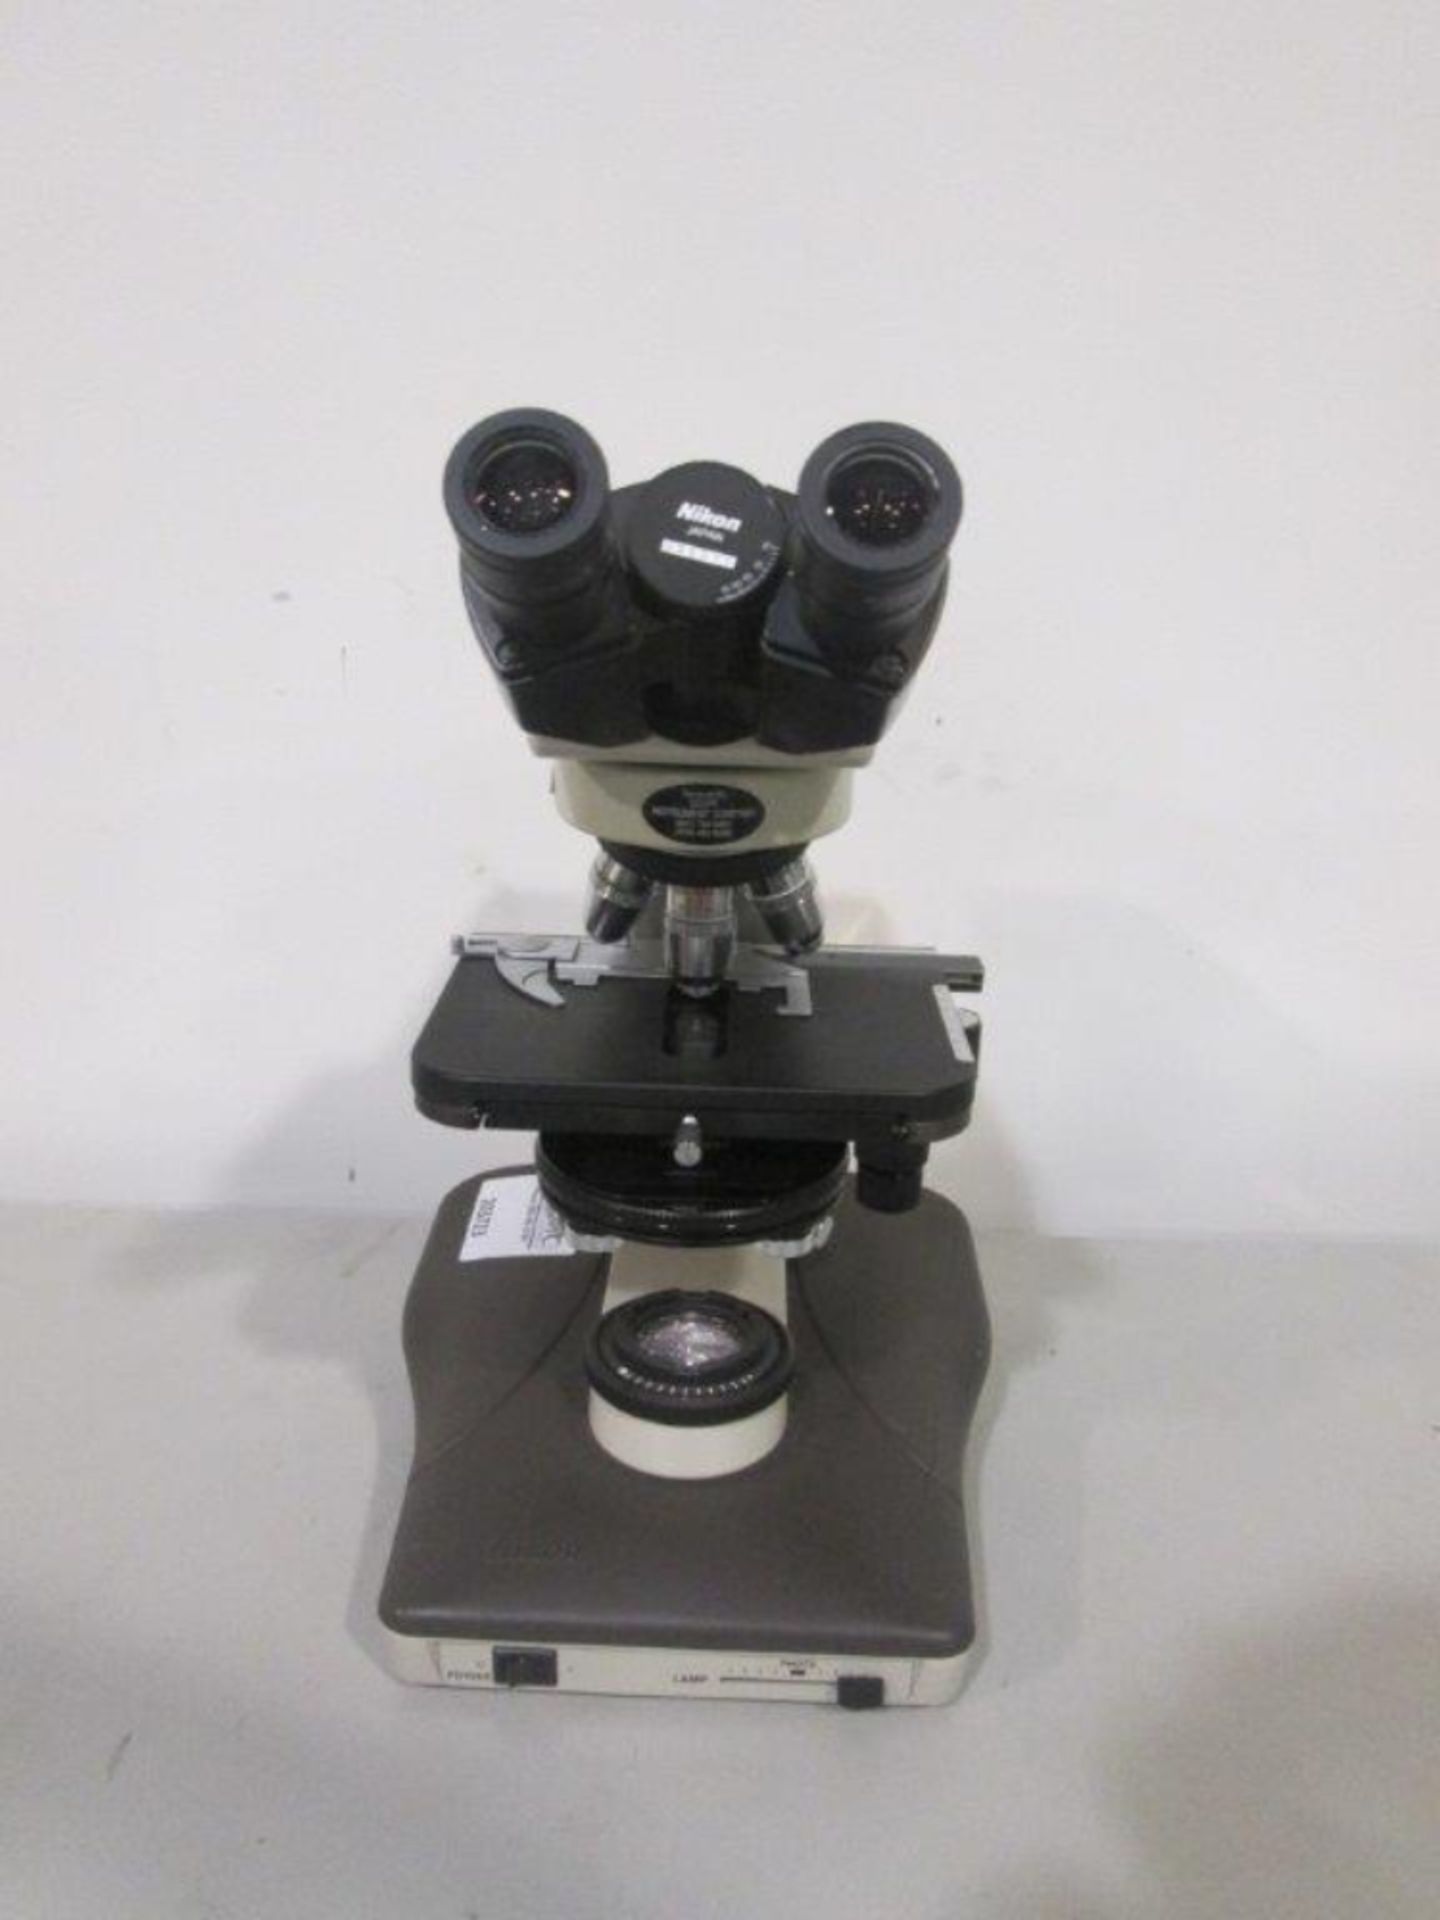 Nikon Labphot 2 Stereo Microscope